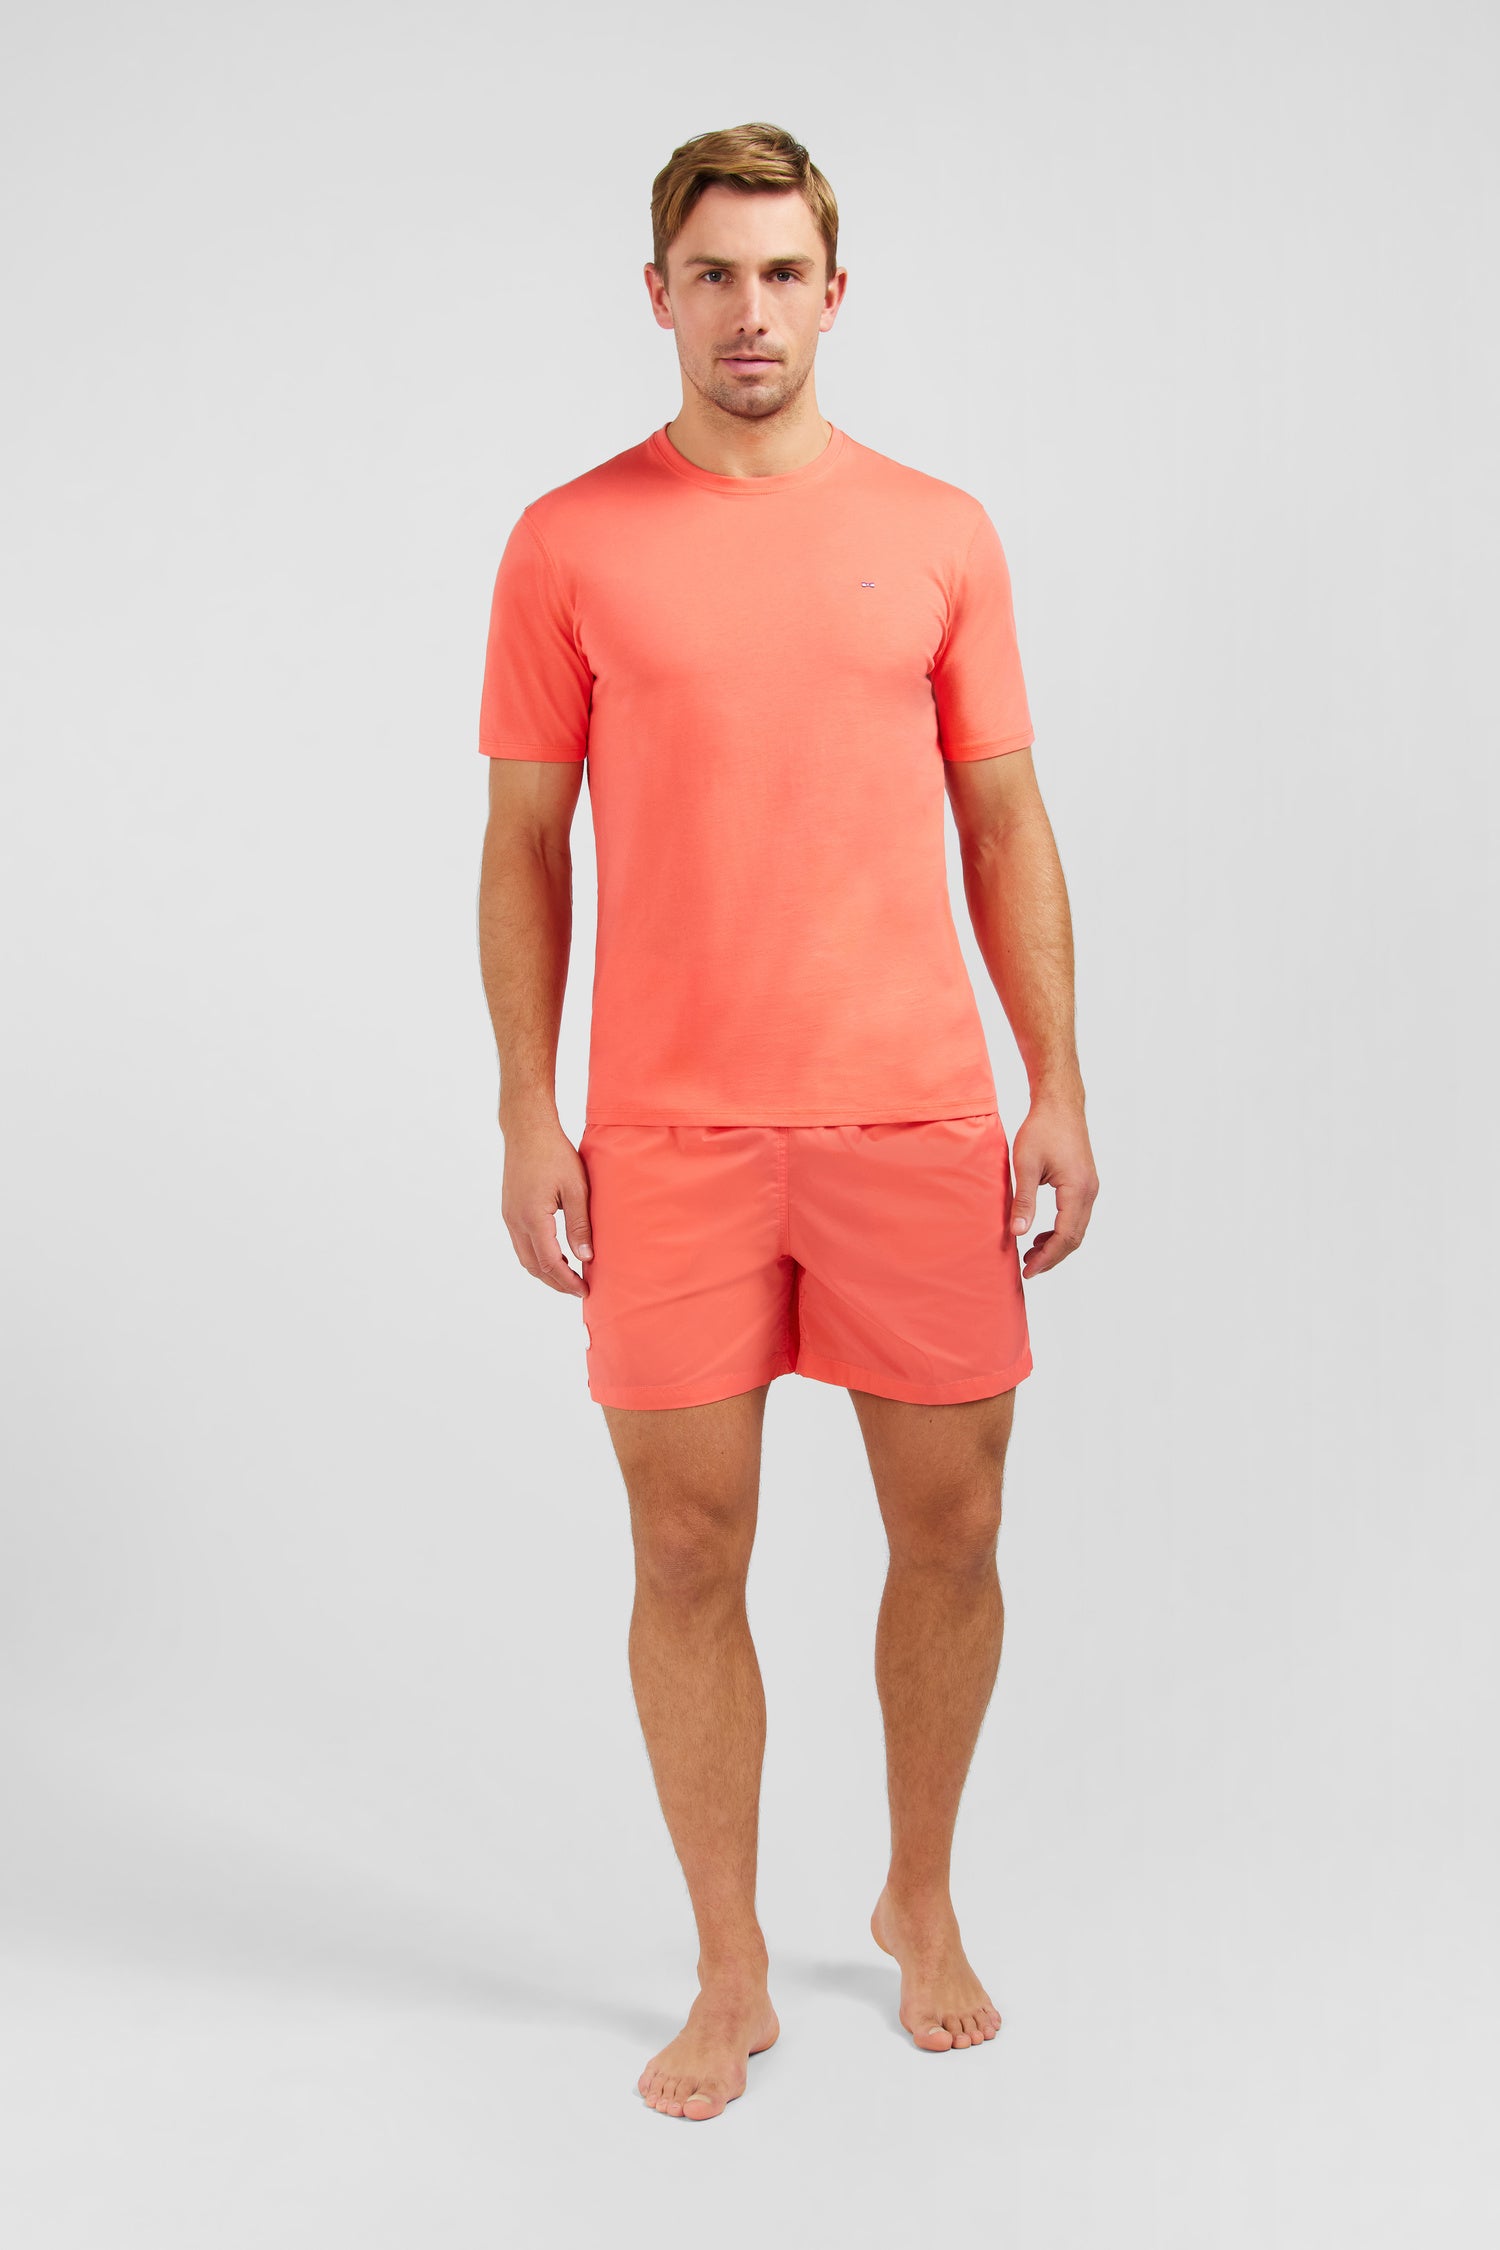 Selected homme  T-shirt rose saumon pour hommes